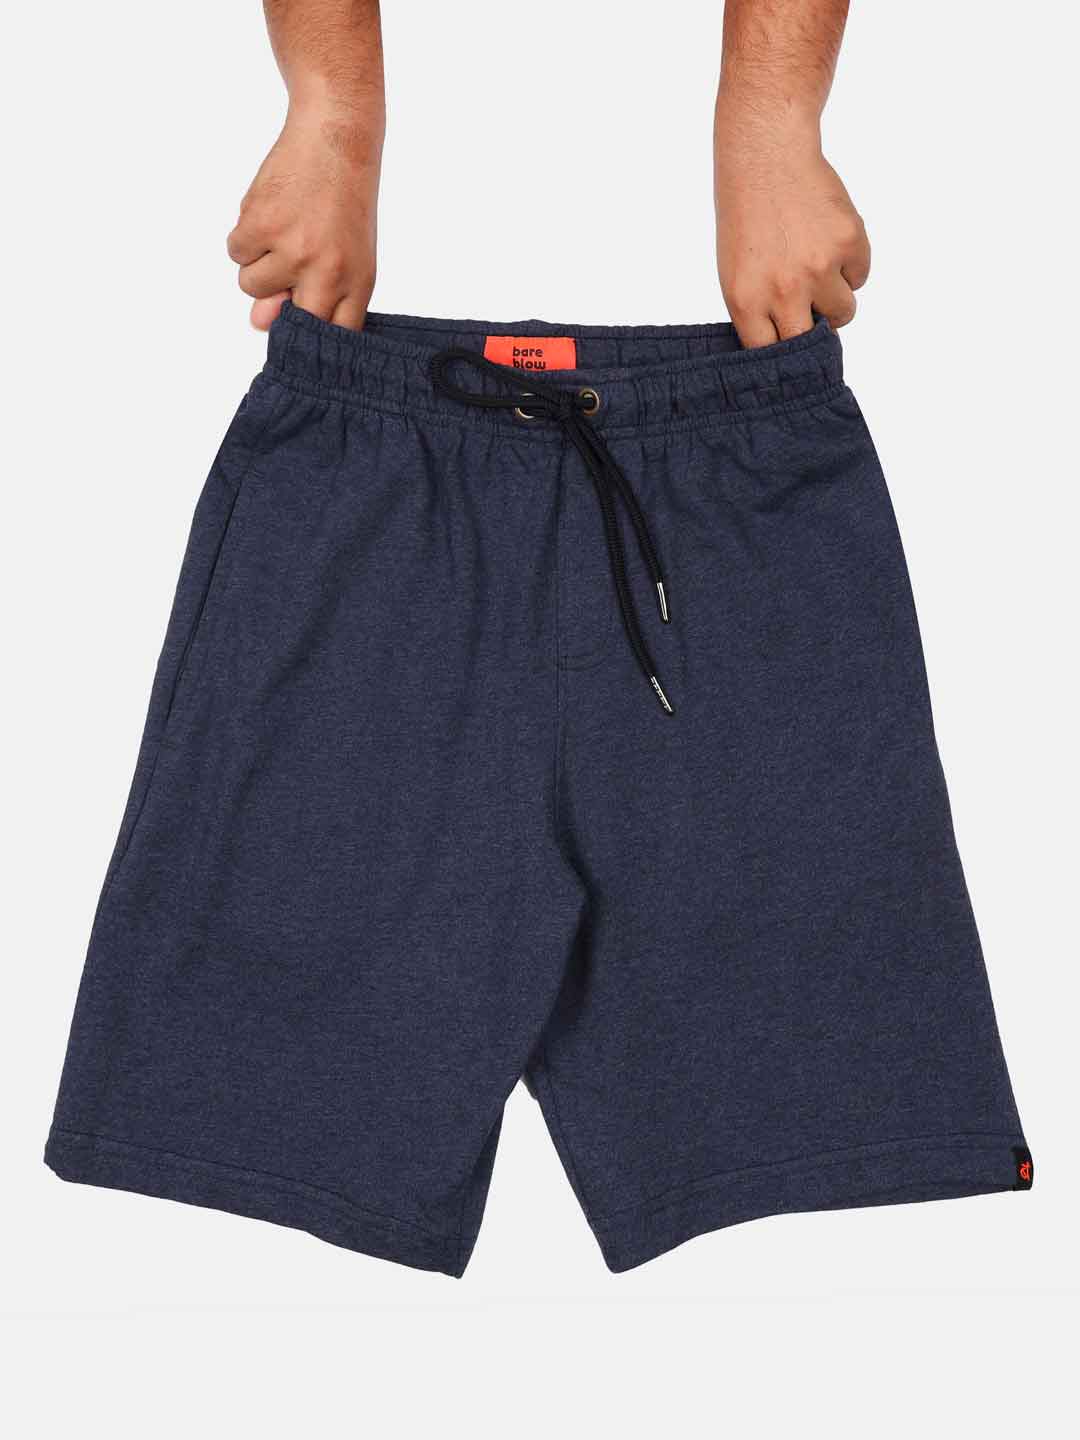 The Navy Blue Chills Everywear Shorts